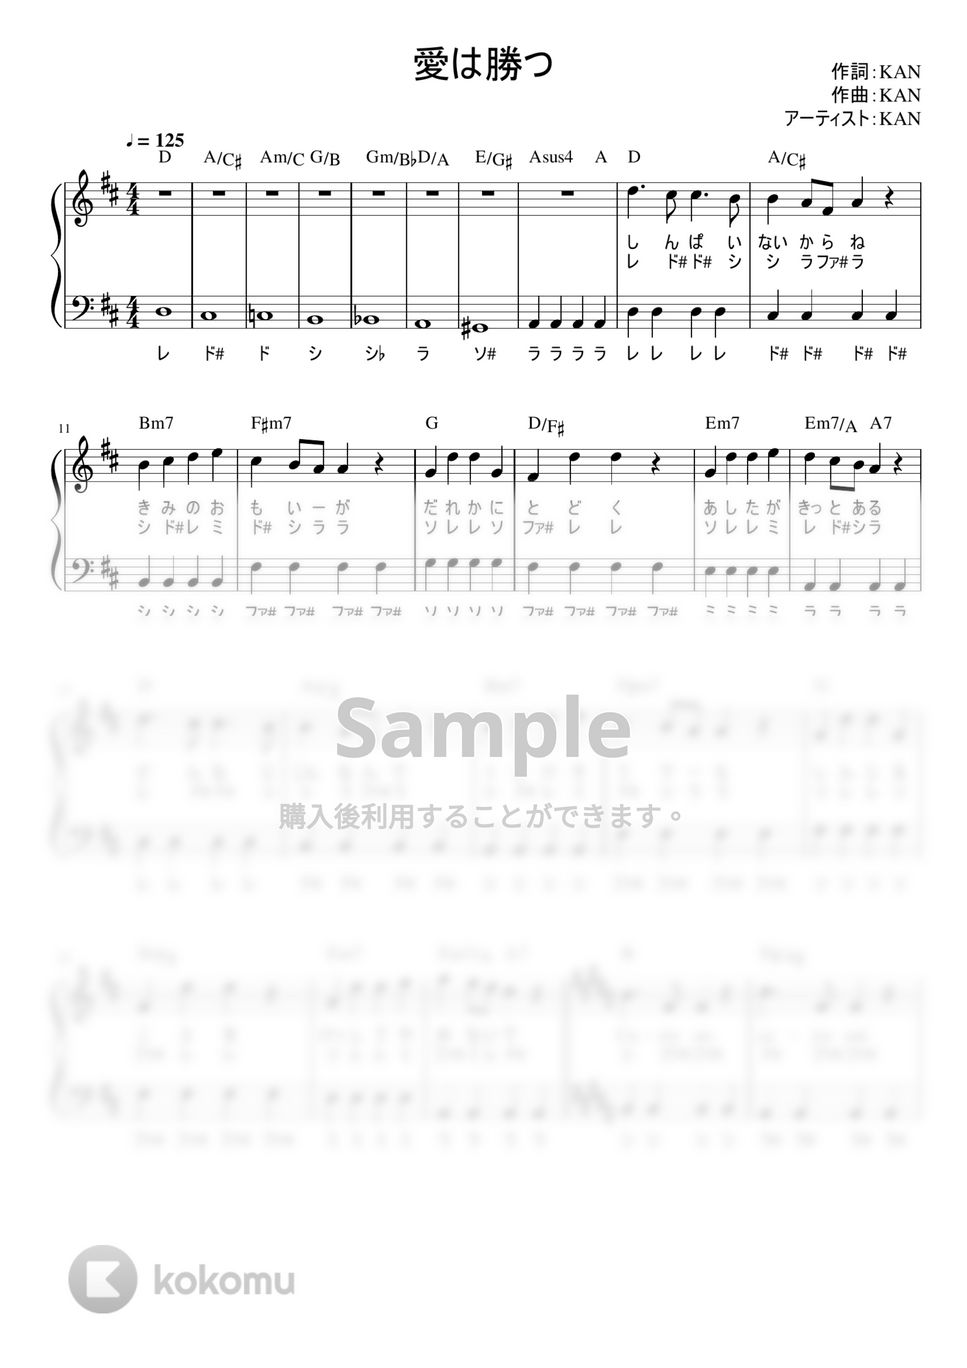 KAN - 愛は勝つ (かんたん / 歌詞付き / ドレミ付き / 初心者) by piano.tokyo